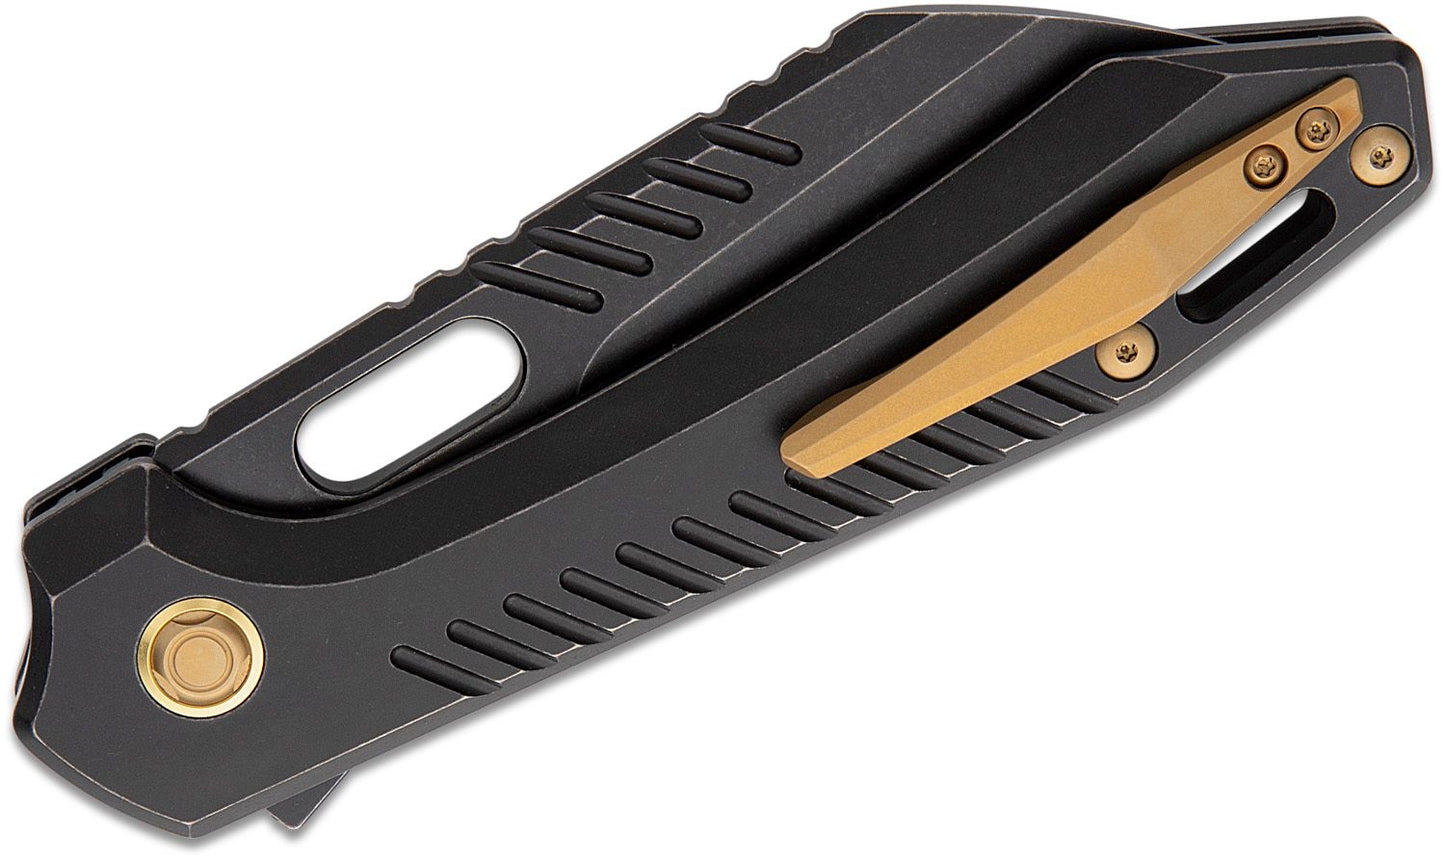 Vosteed Knives RSKAOS Top Liner Lock Flipper Knife 3.3" M390 Black Stonewashed Sheepsfoot Blade, Black Stonewashed Titanium Handles, Hard Case - MHET3 - Serial # 24